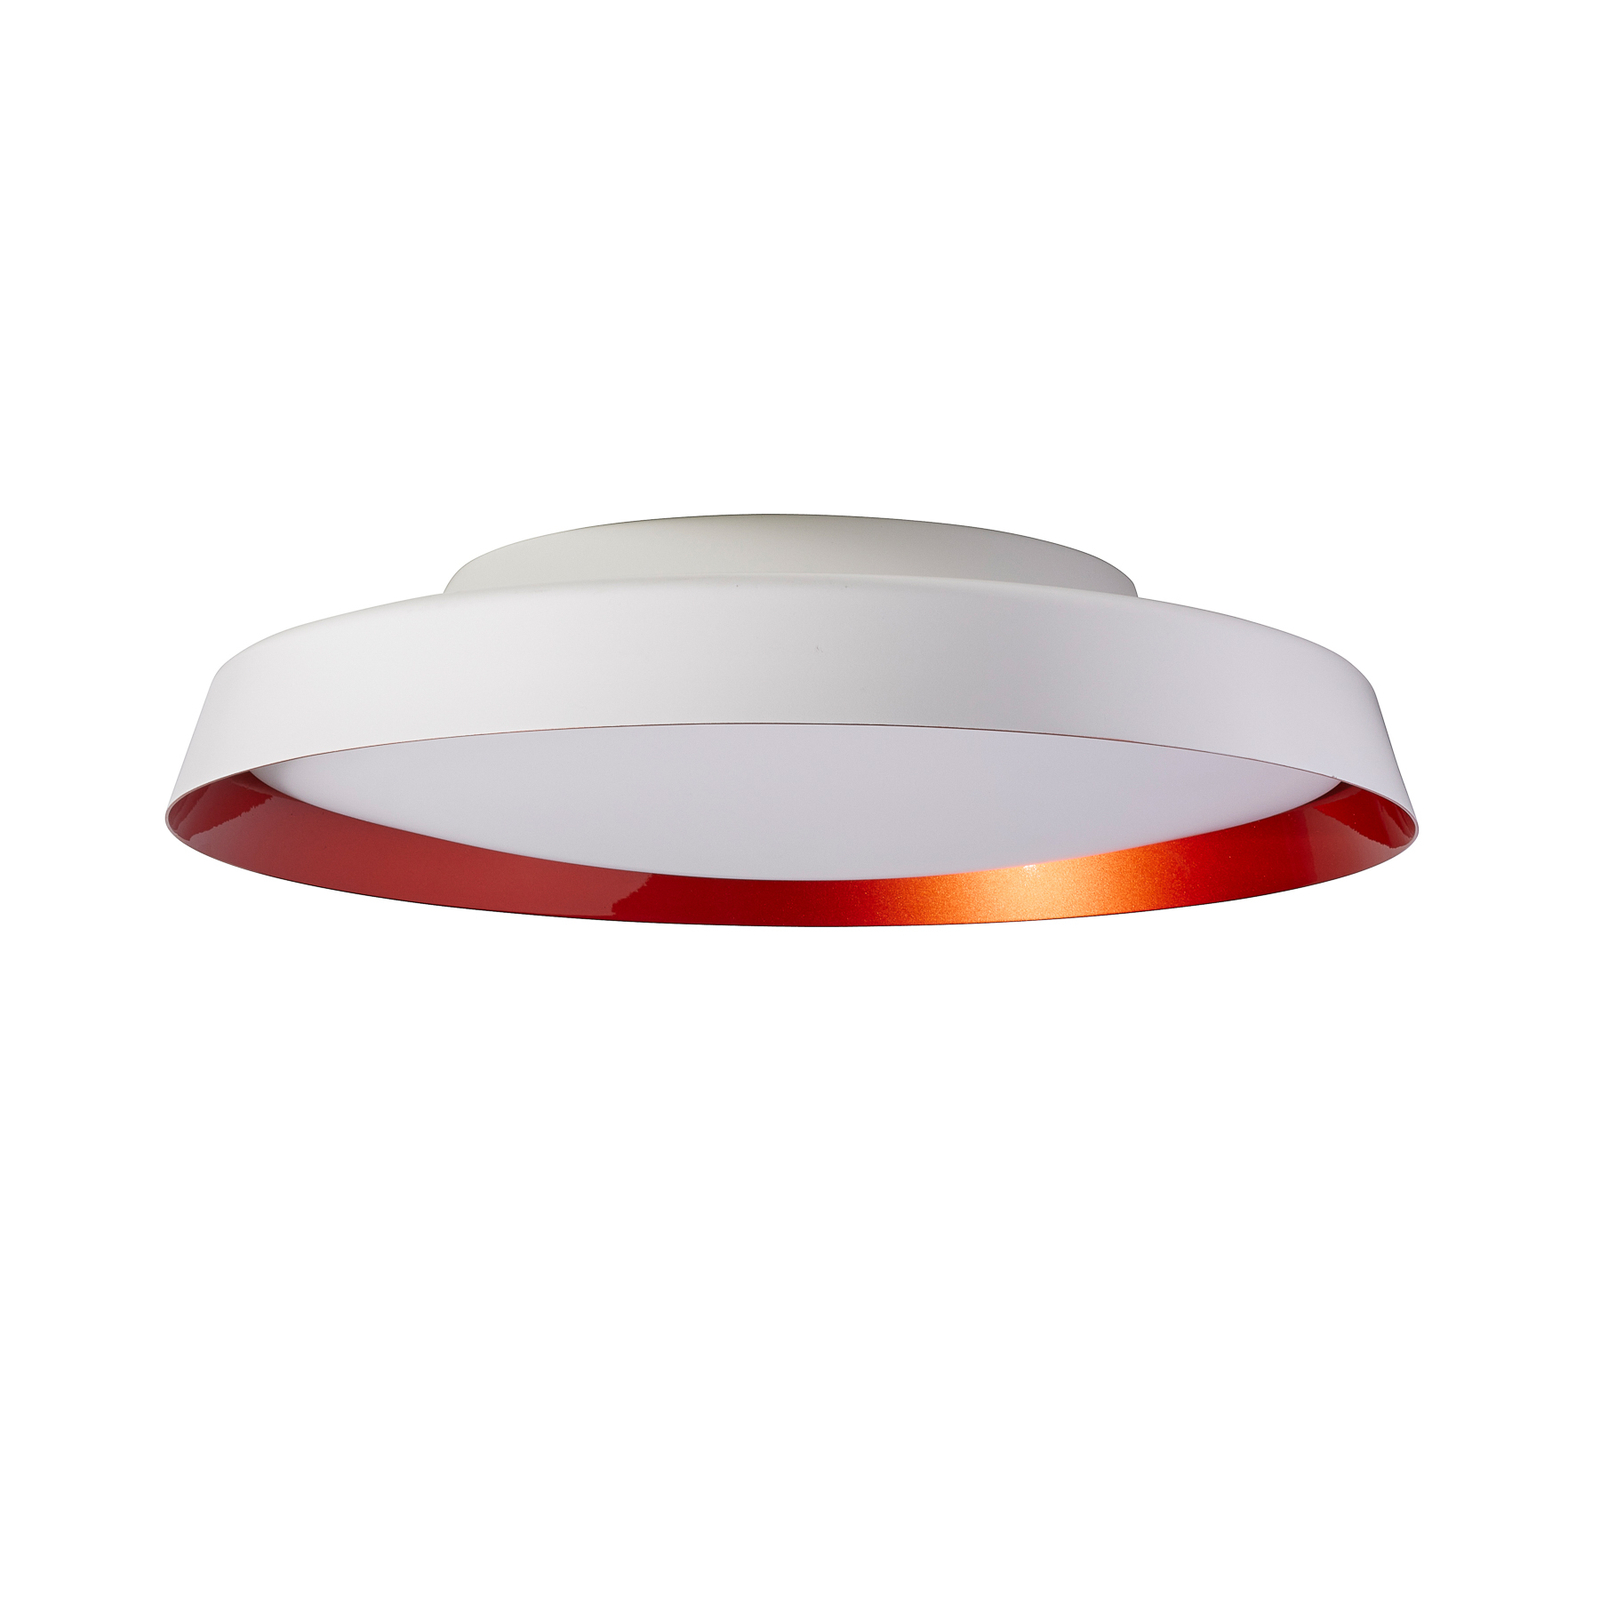 LED plafondlamp Boop! Ø54cm wit/rood metallic